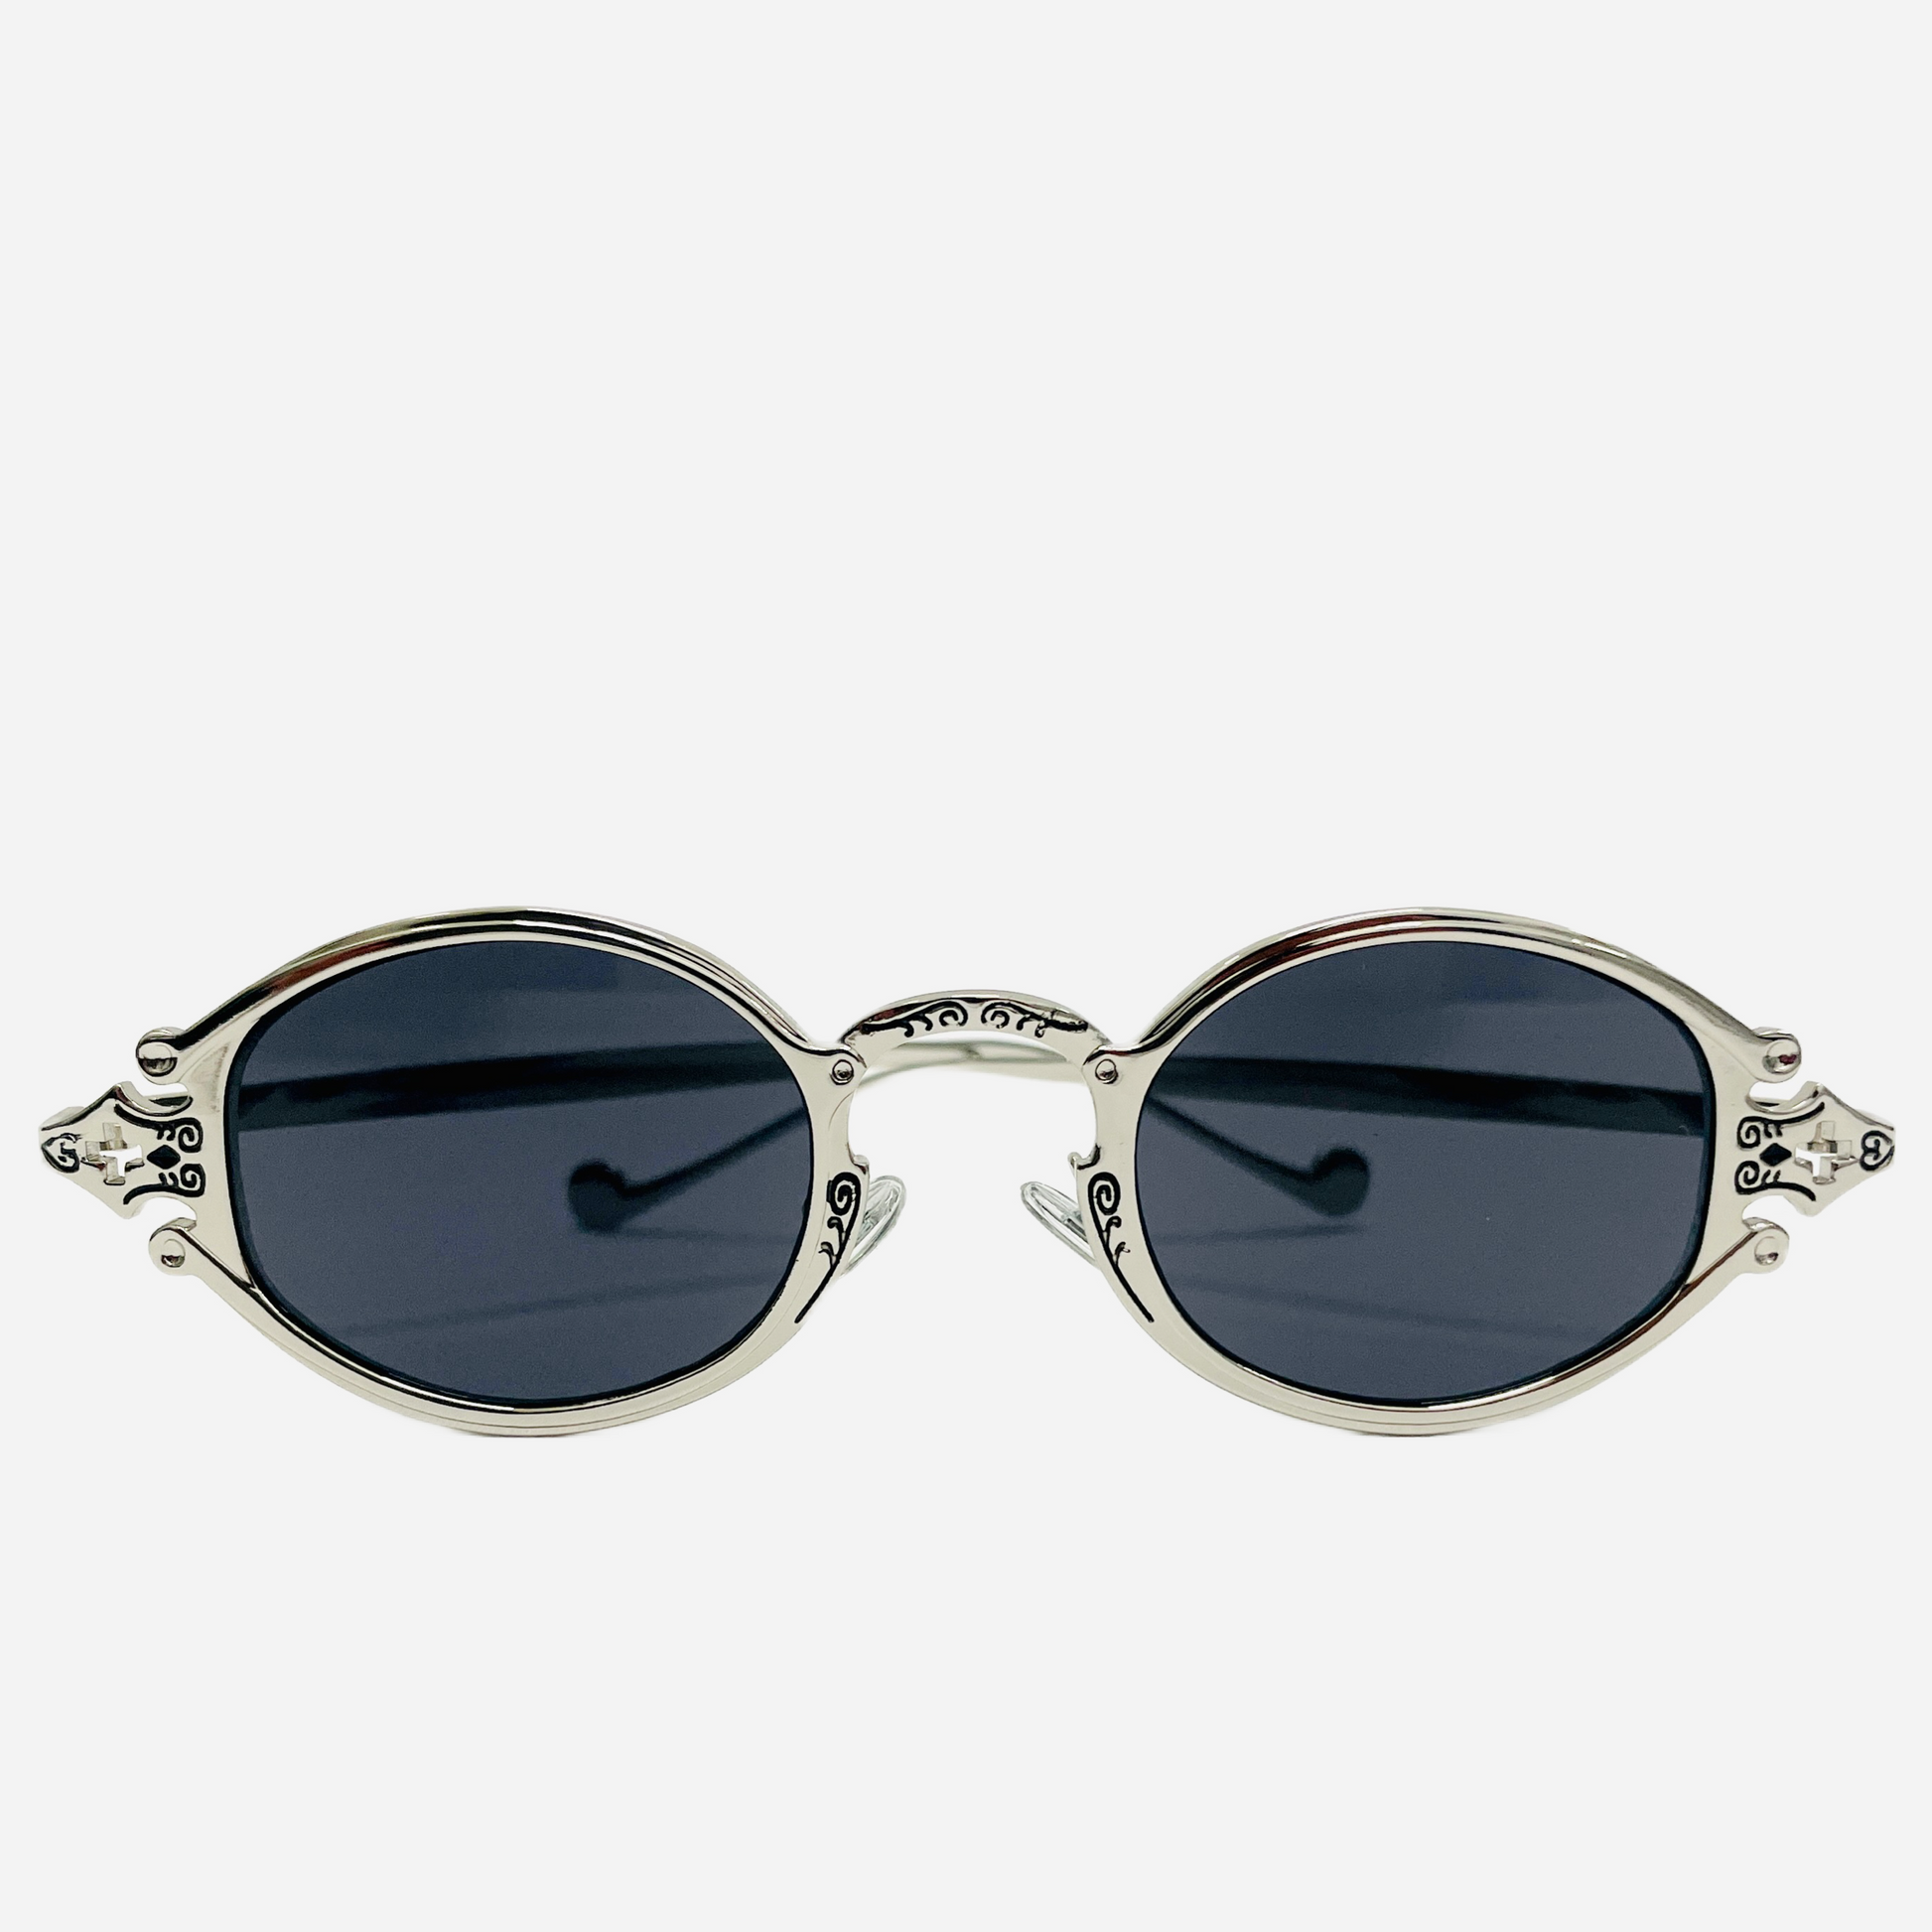 Vintage-Jean-Paul-Gaultier-Sonnenbrille-Sunglasses-Model-56-0001-silver